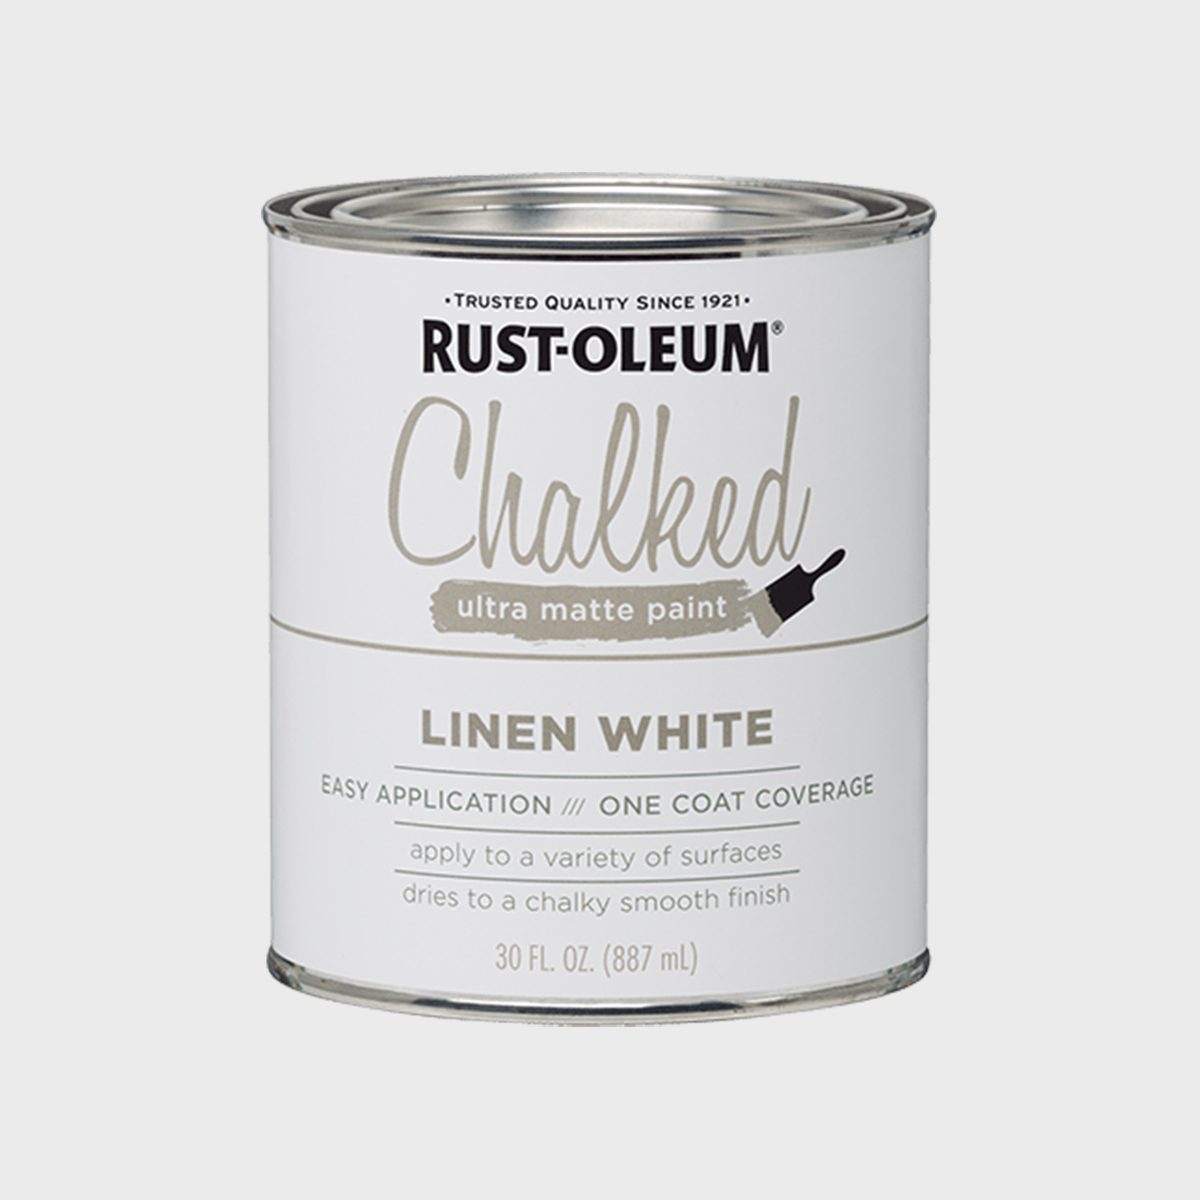 Rust Oleum Interior Chalked Linen White Ecomm Via Amazon.com